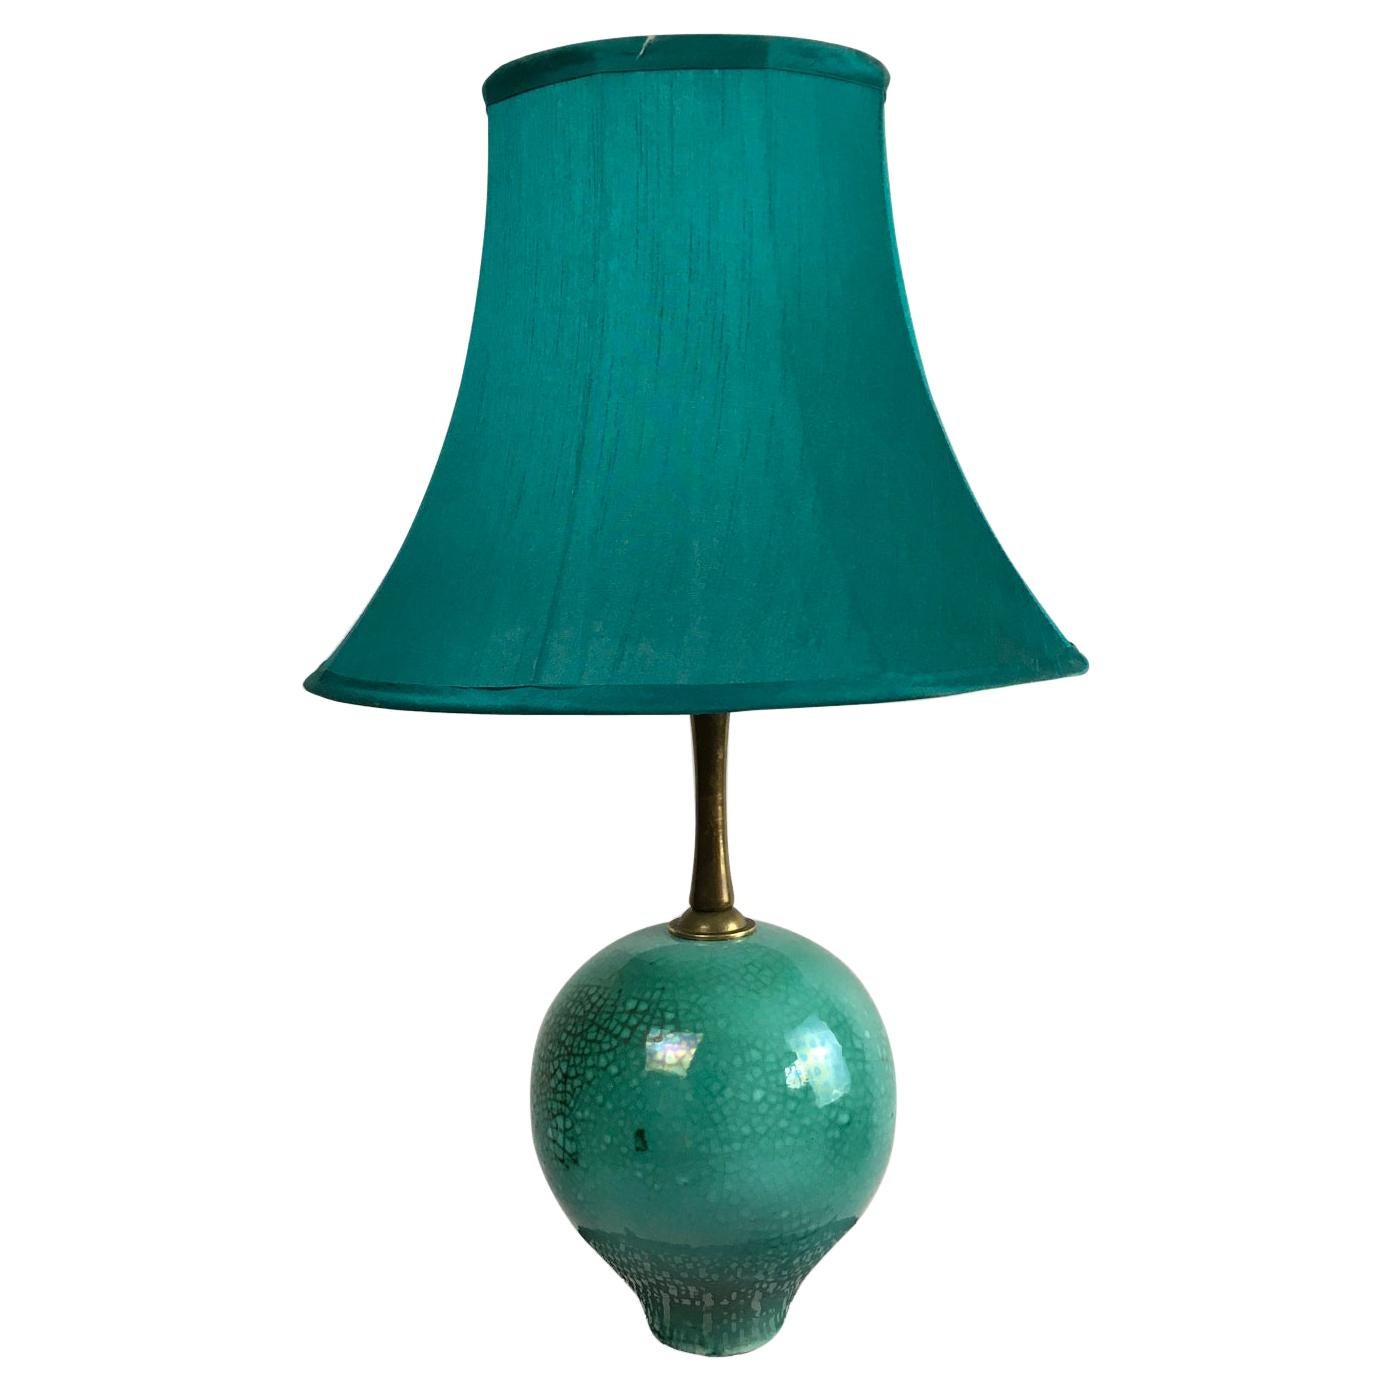 1930s Primavera Green Glazed and Cracked Ceramic Table Lamp